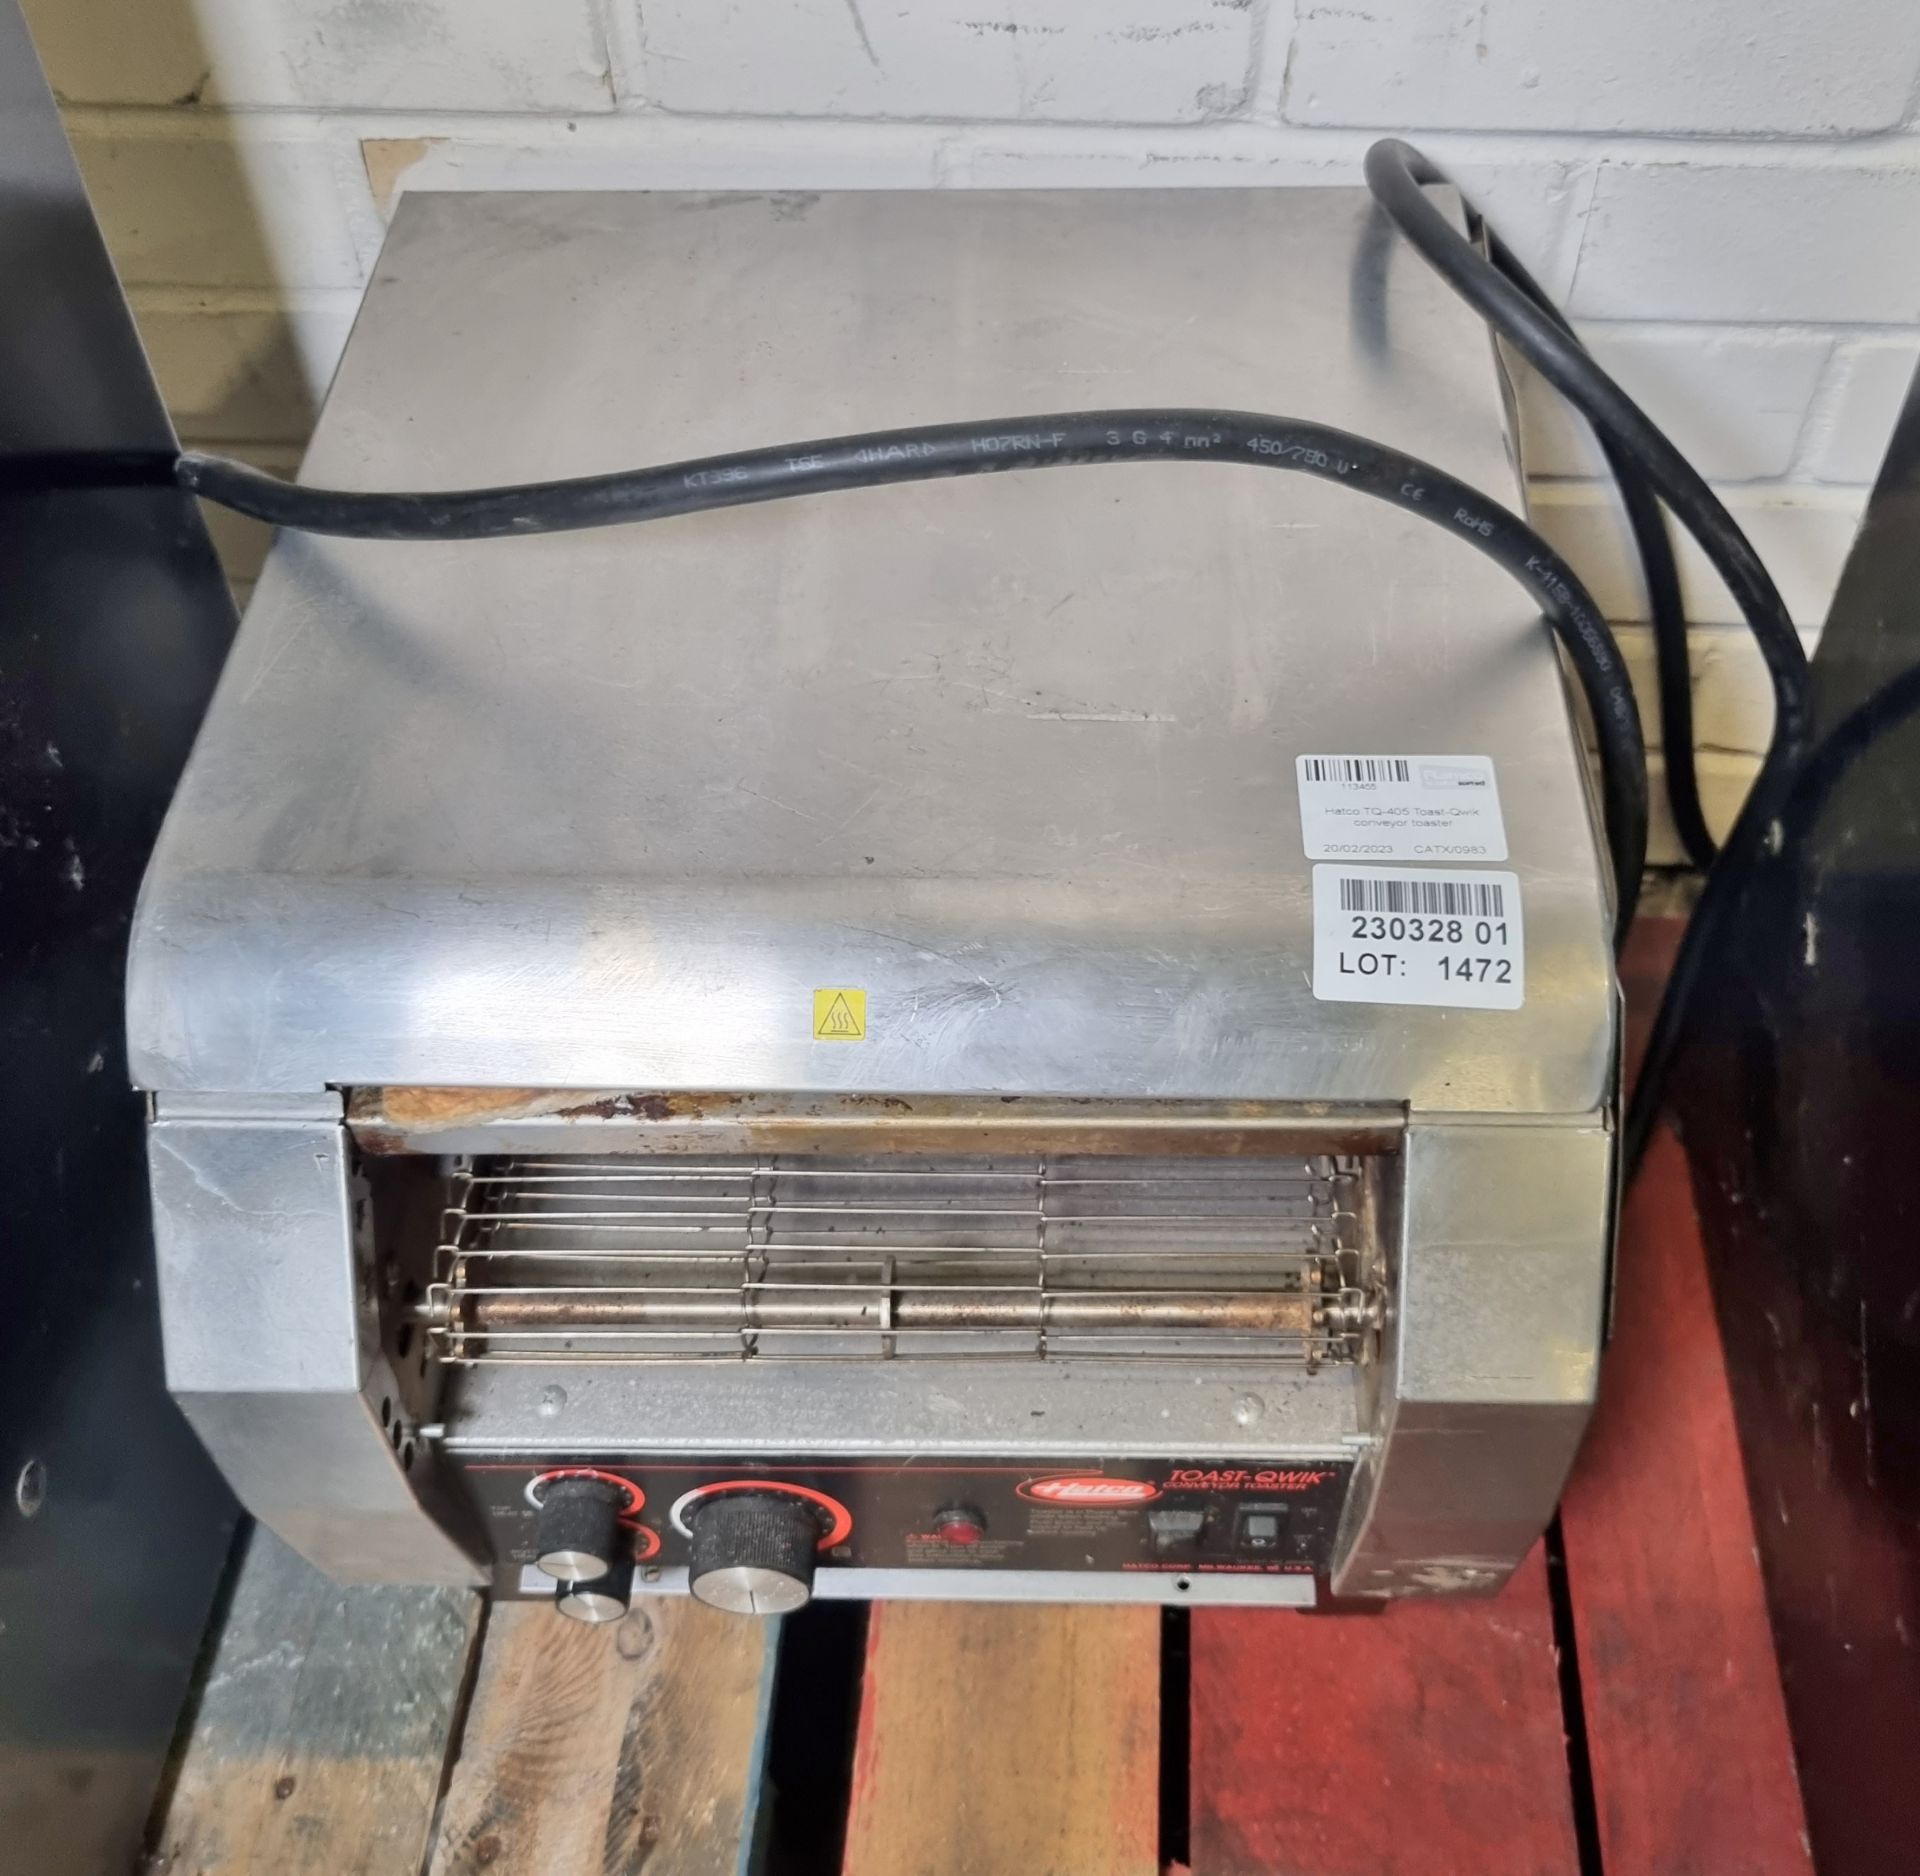 Hatco TQ-405 Toast-Qwik conveyor toaster - 370mm W - Image 2 of 4